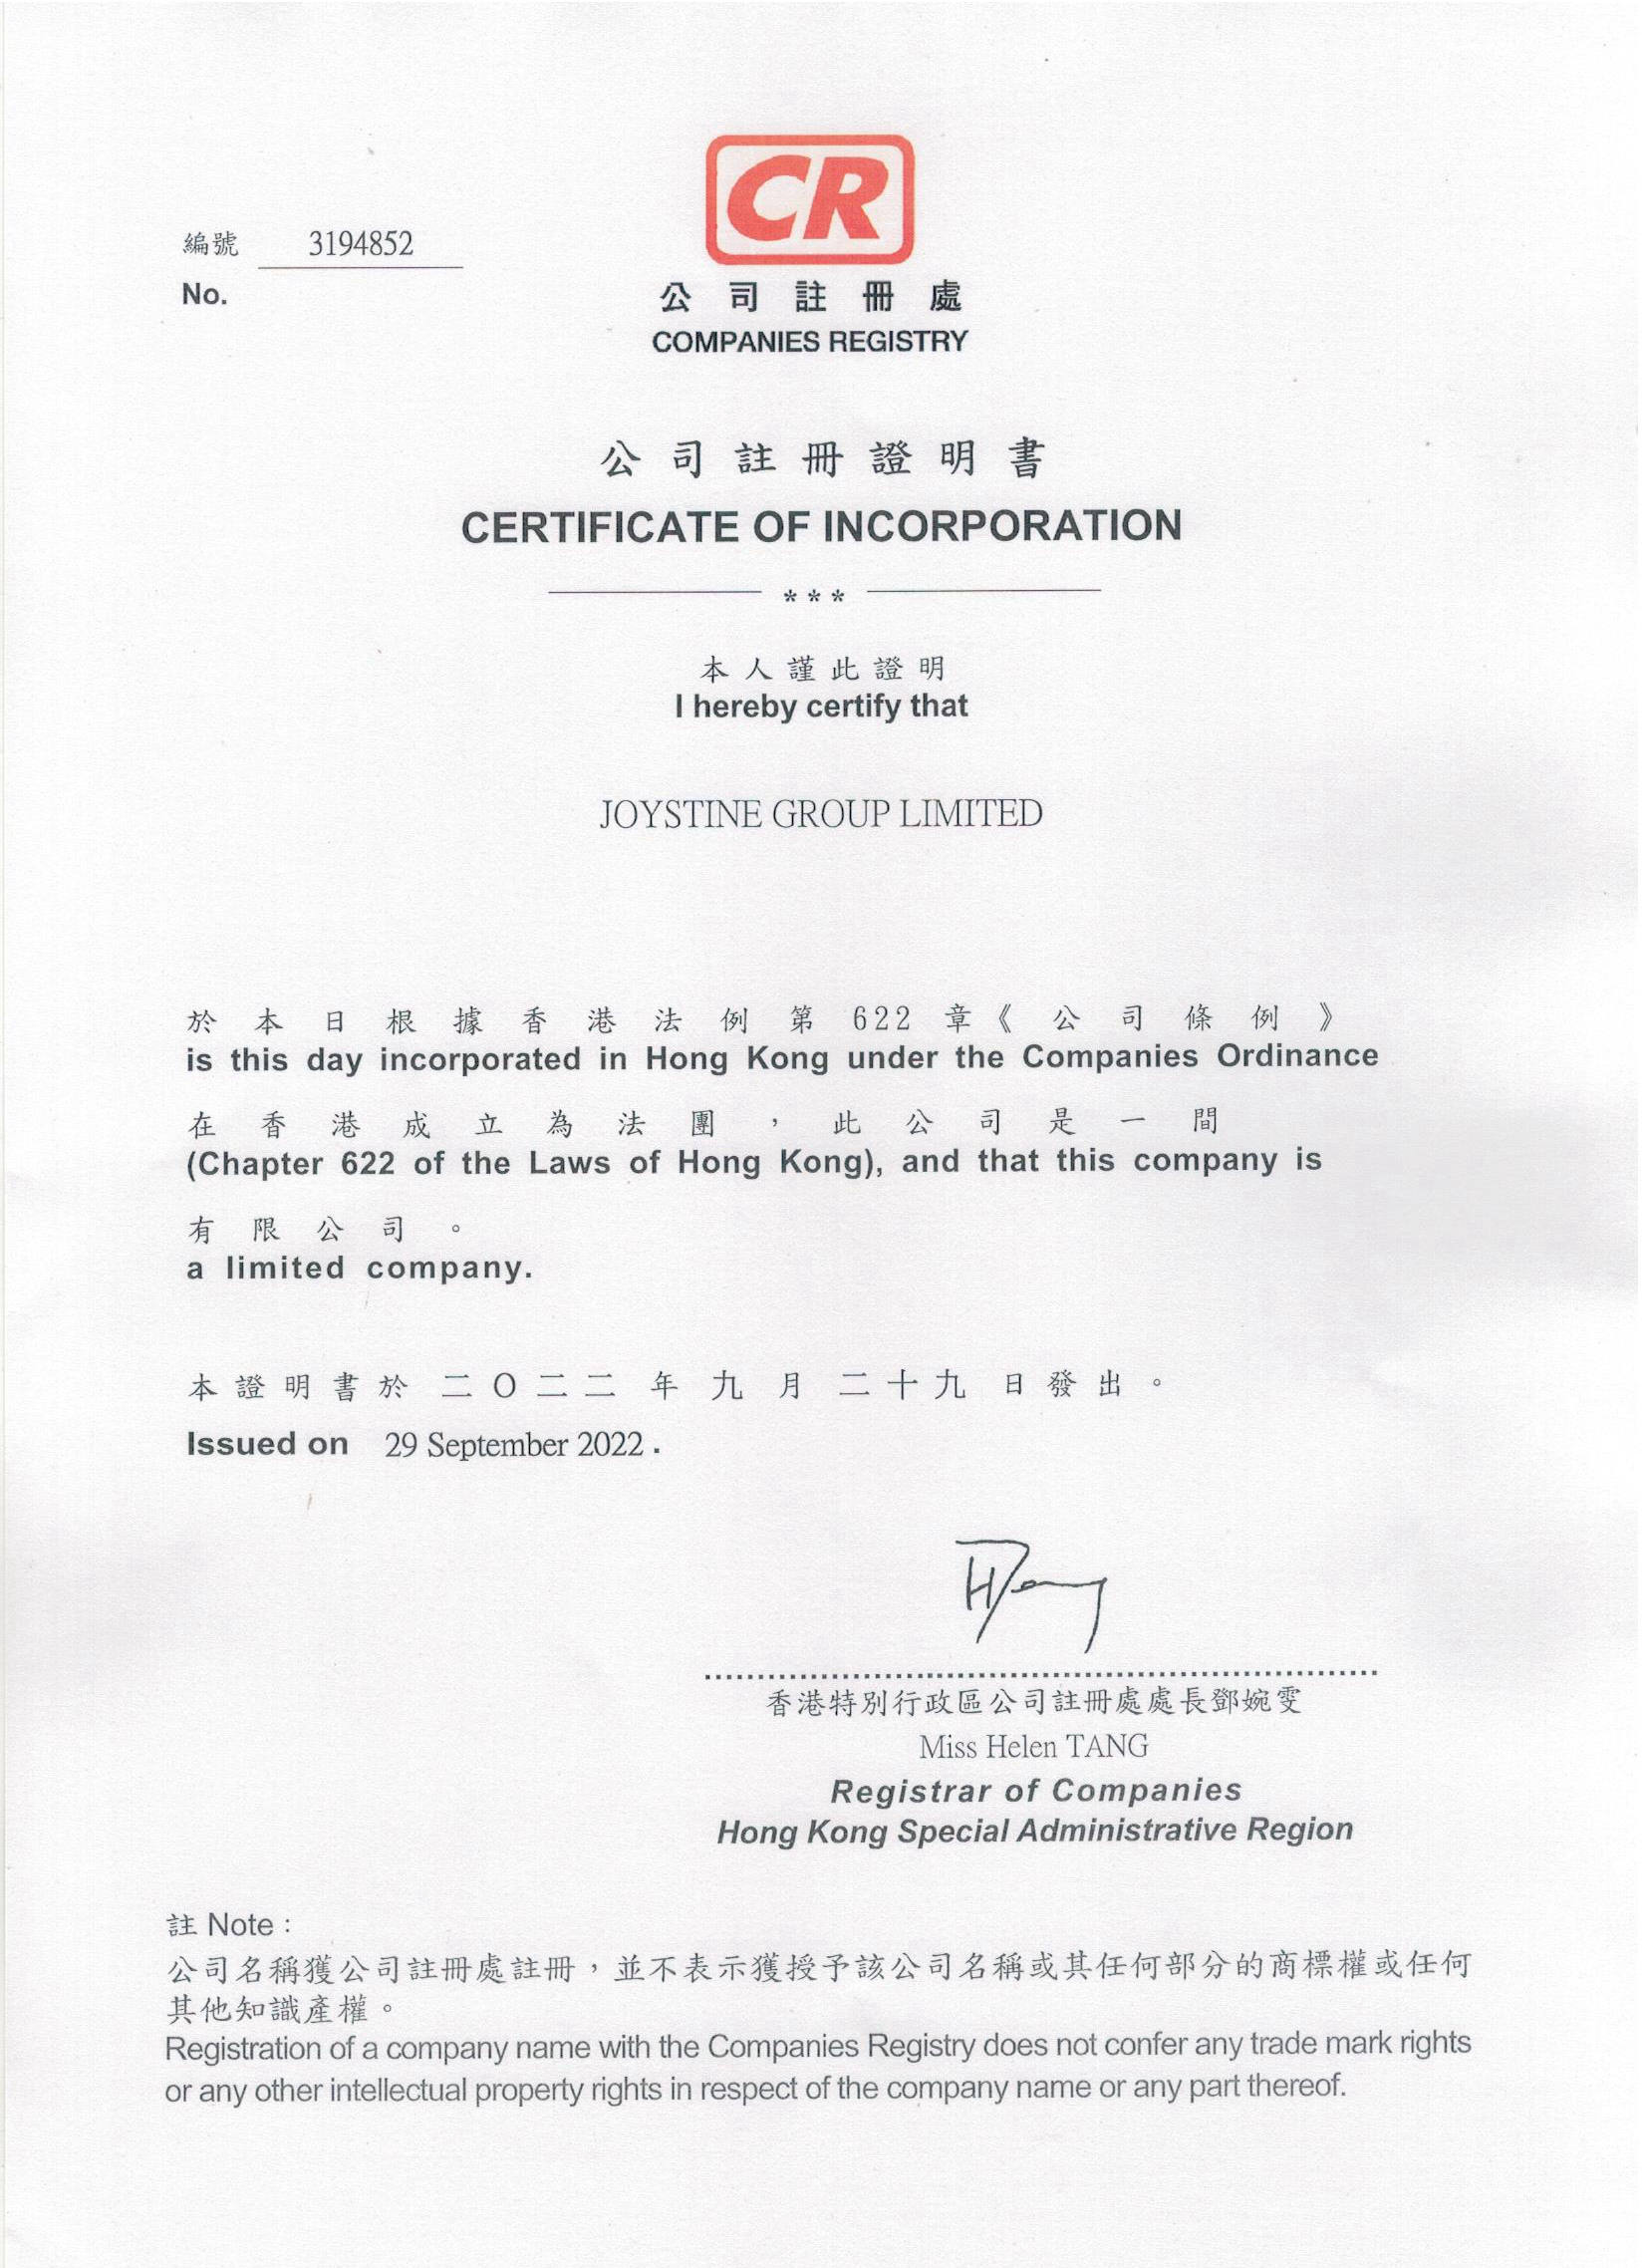 Certificate of Incorporation of Joystine